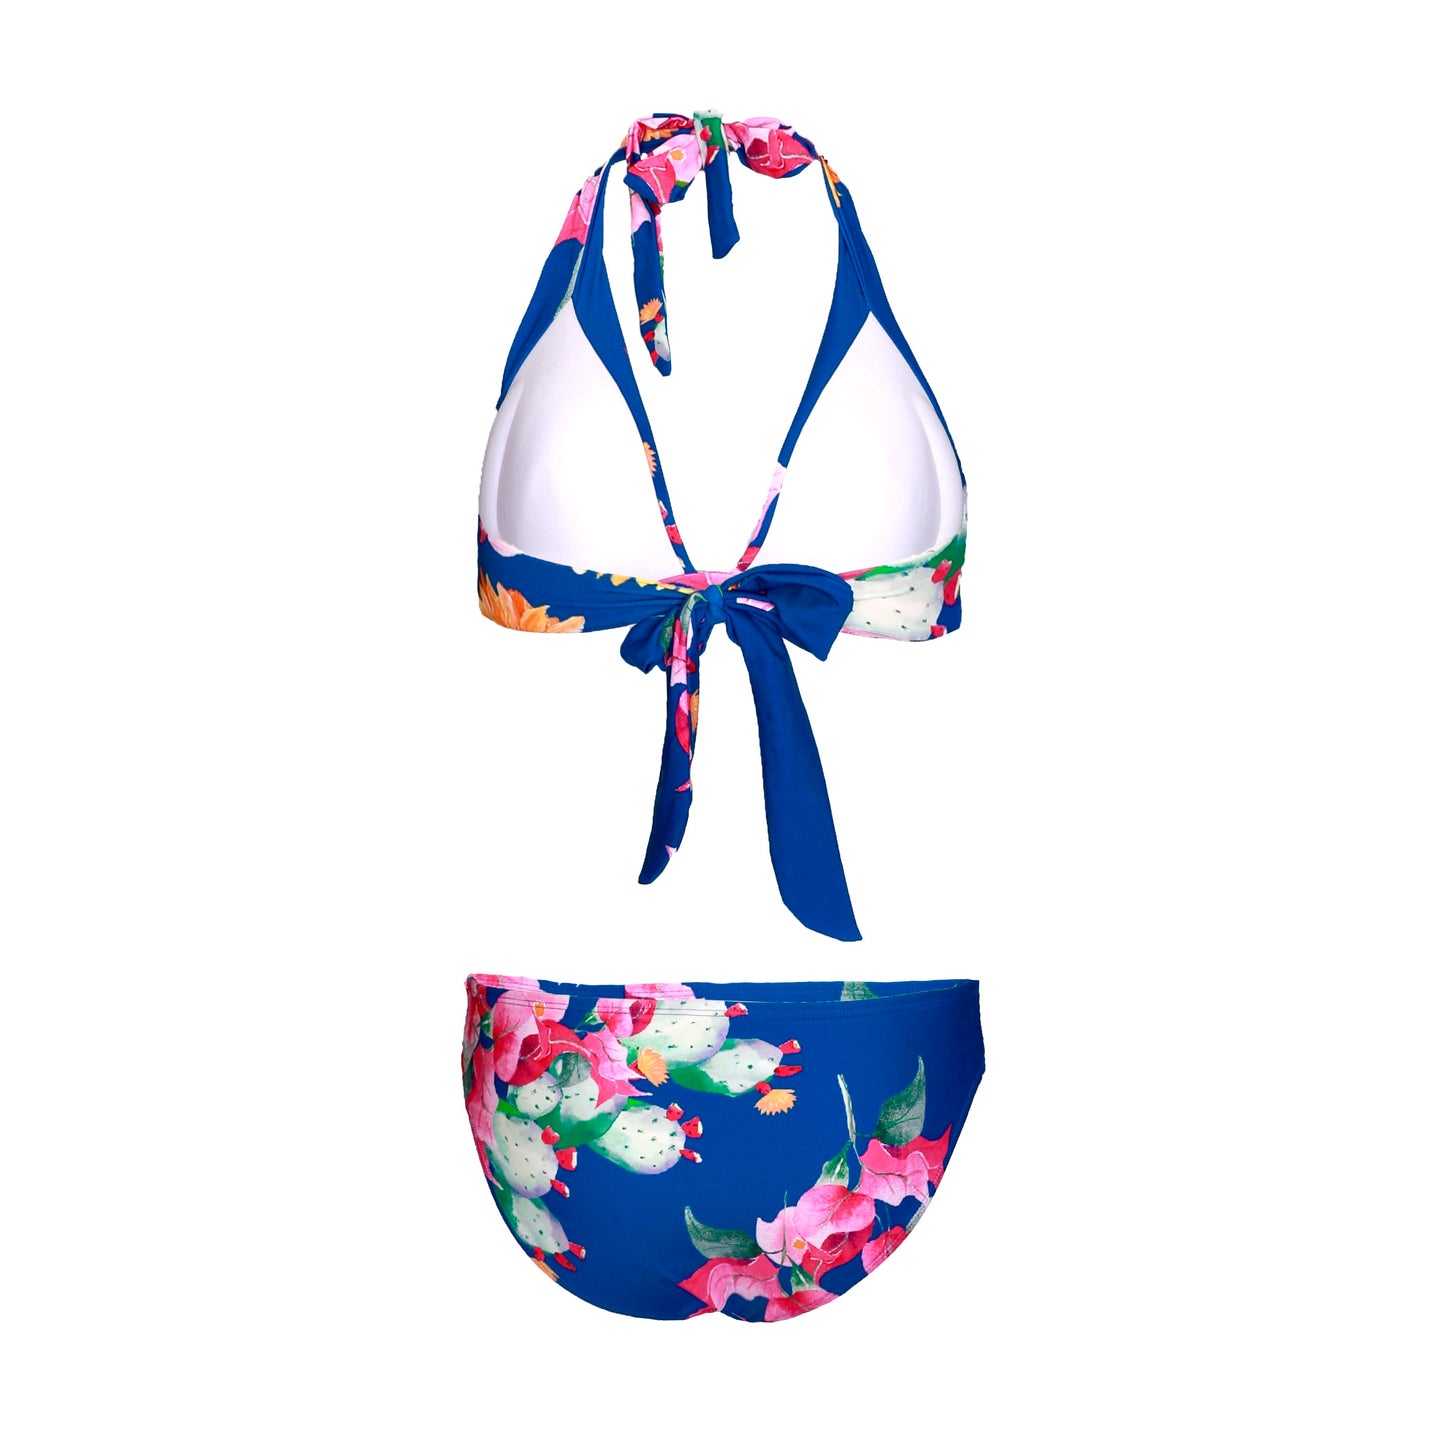 Low waisted fleur bikini bottoms. Swimwear made to match with other bikini tops. 